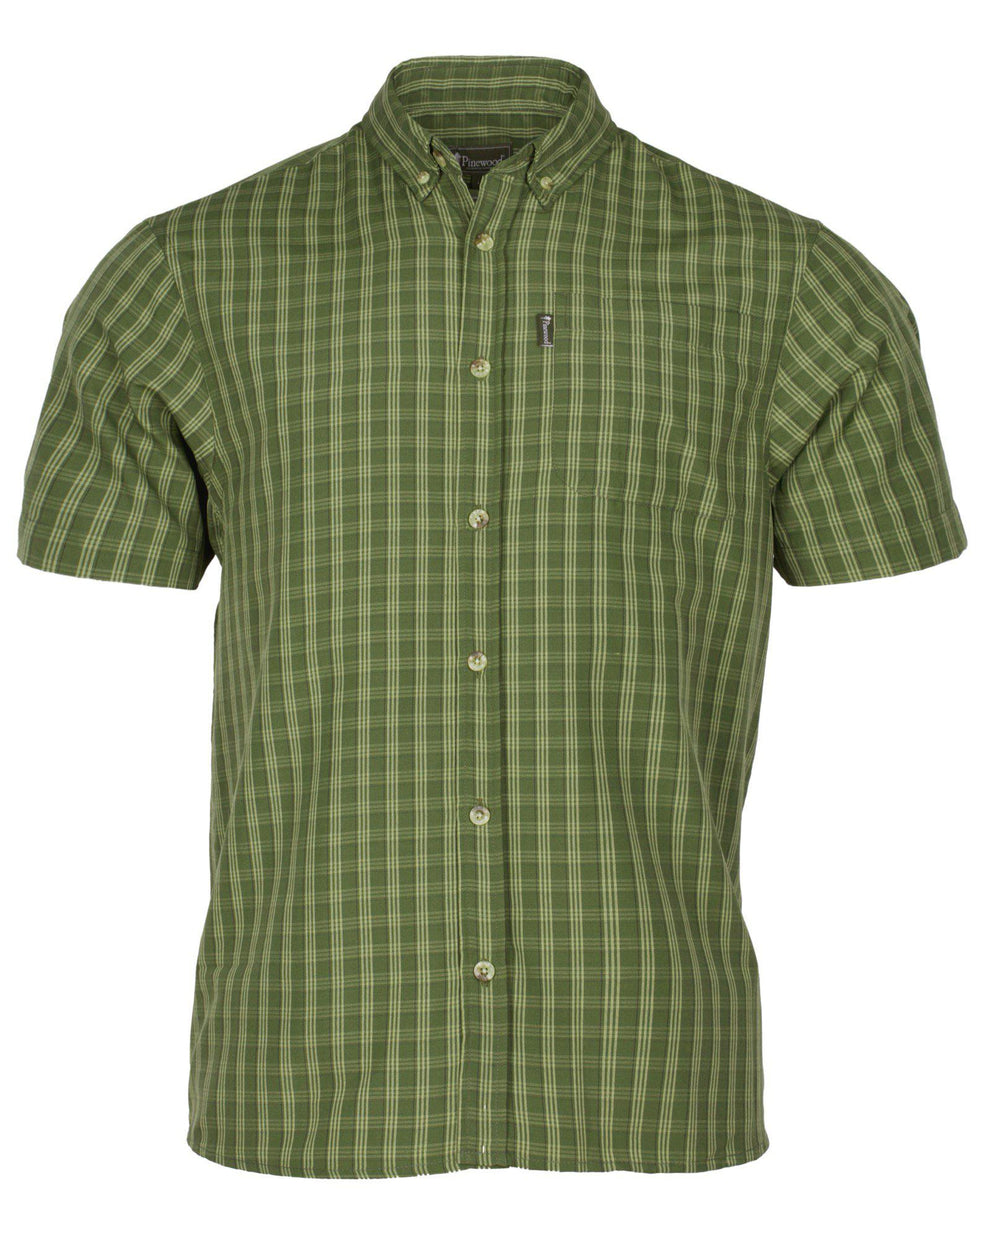 5235-100-01_Pinewood-Summe-Shirt-Mens_Green